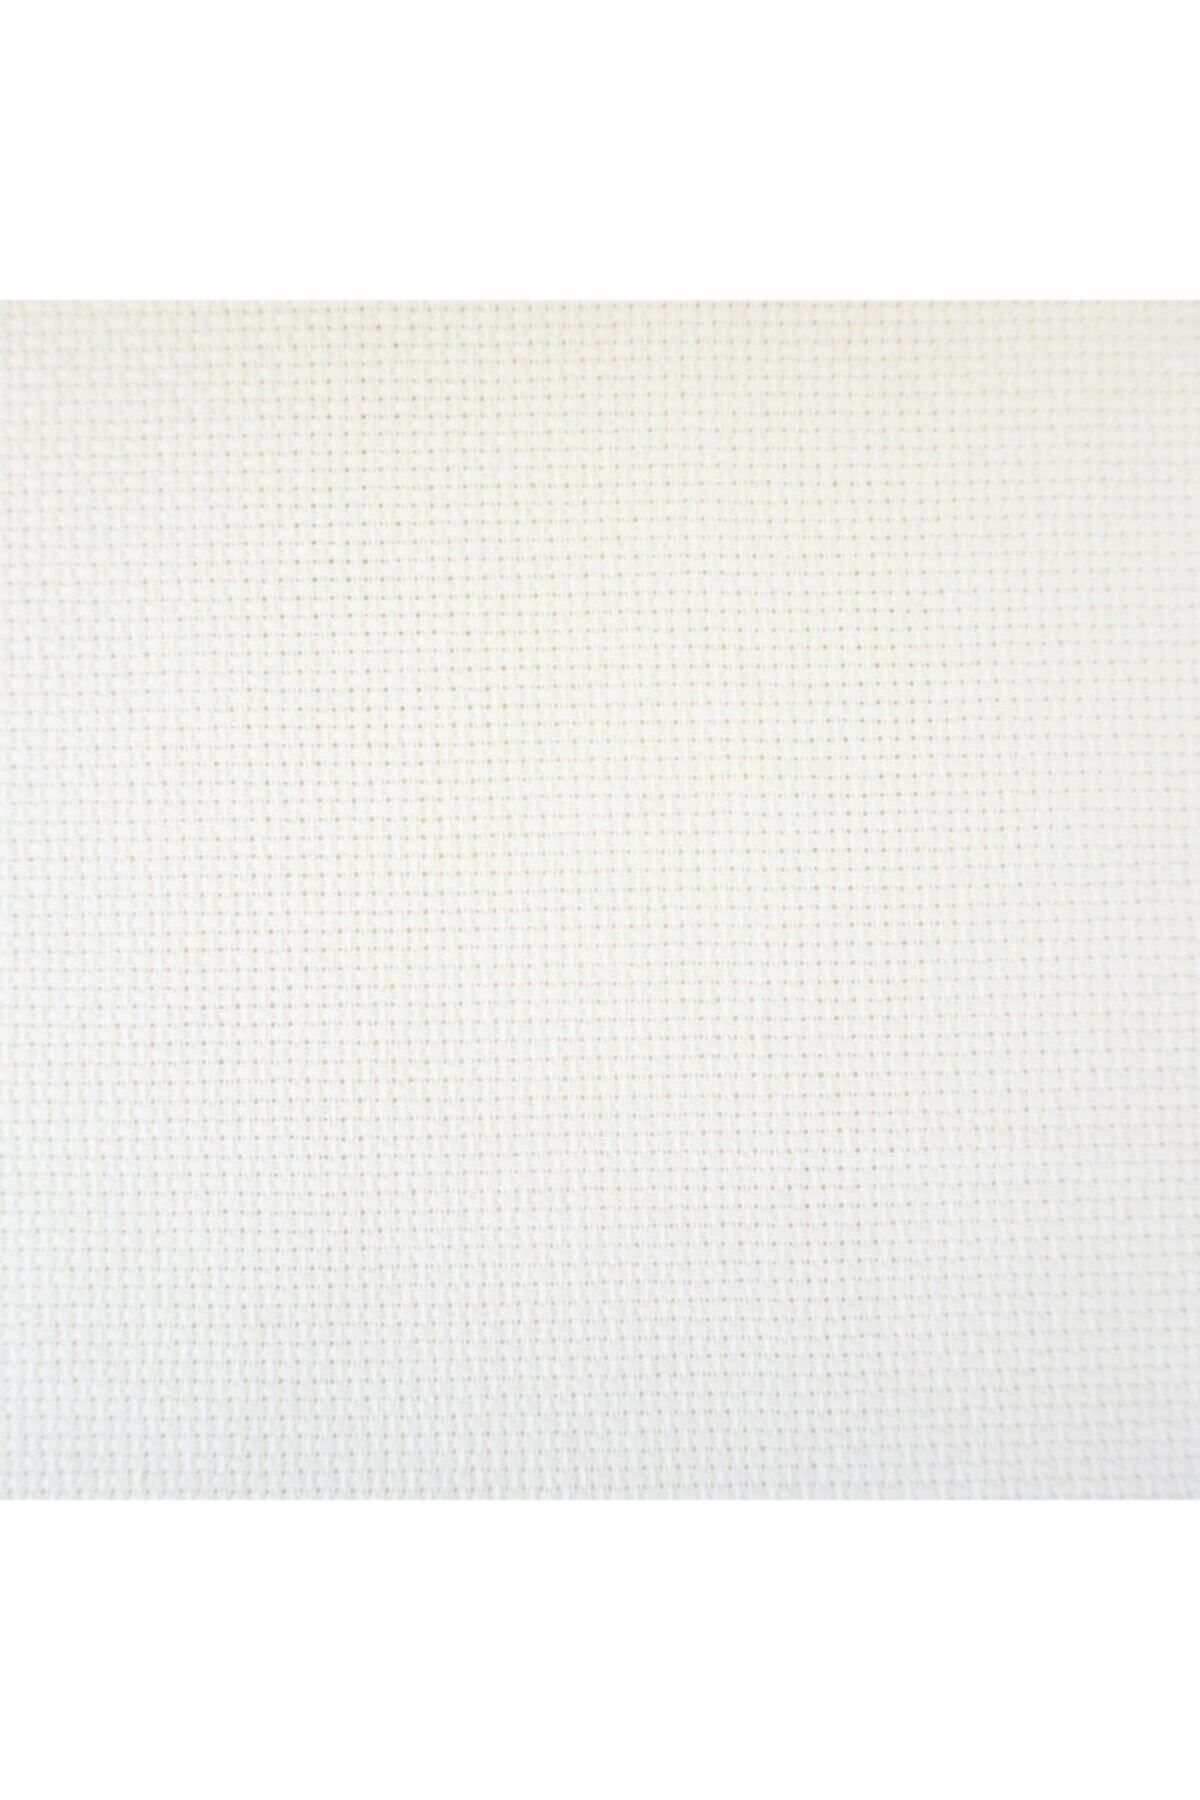 domino Etamin Kumaşı Orijinal Home Series Kırık Beyaz 75x130